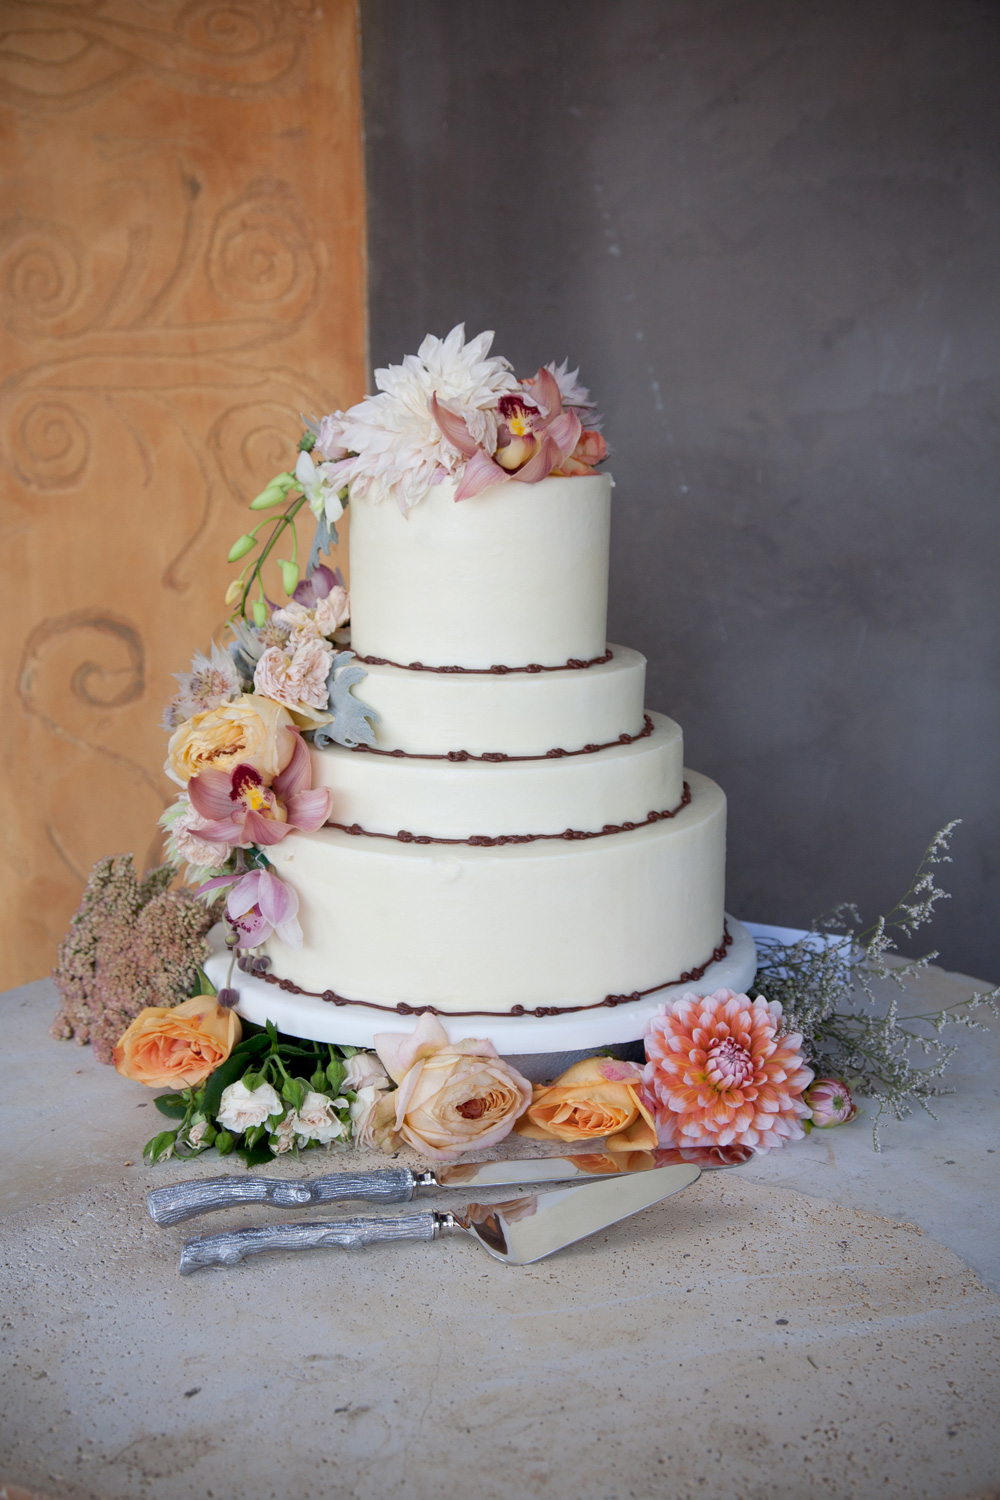 The wedding cake from Flour Chylde Bakery